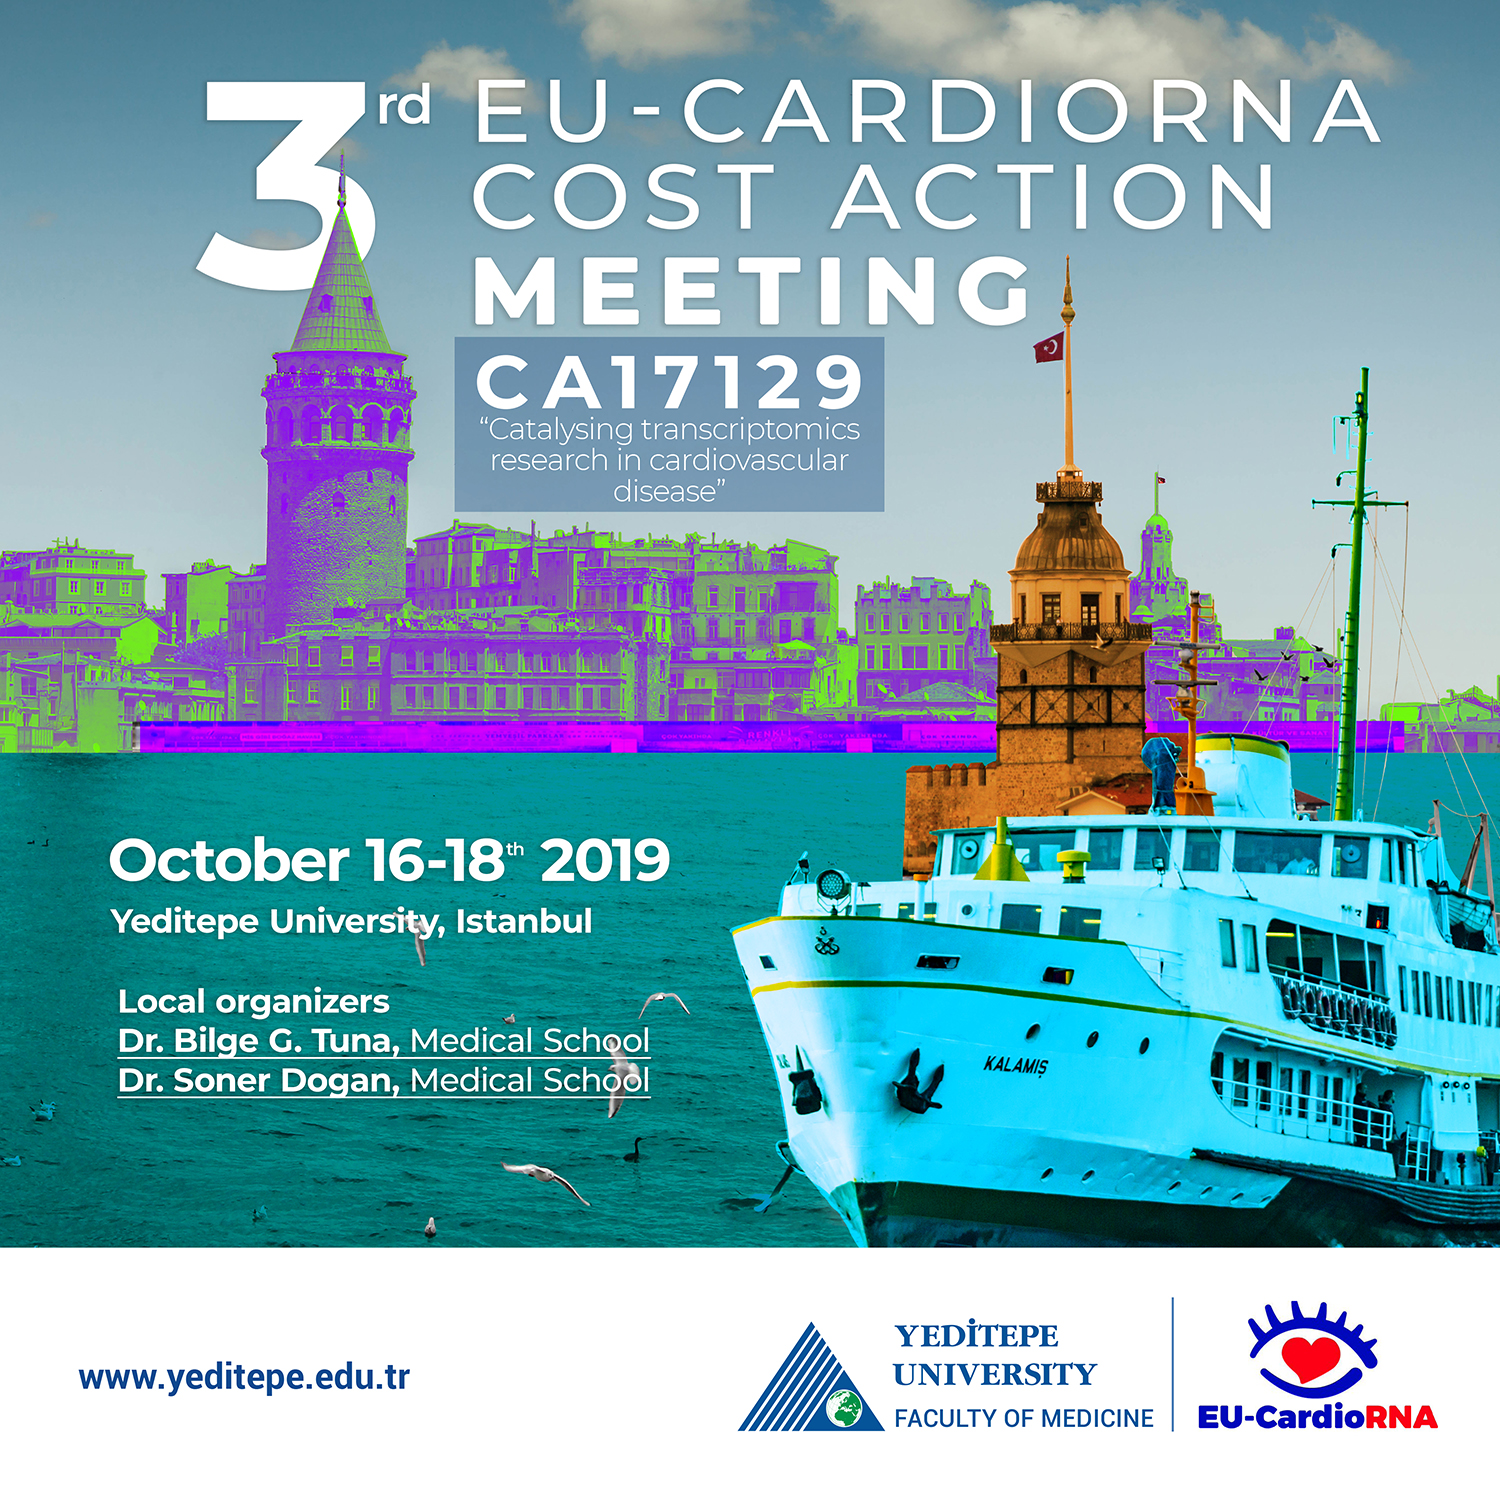 3rd EU-Cardiorna Cost Action Meeting